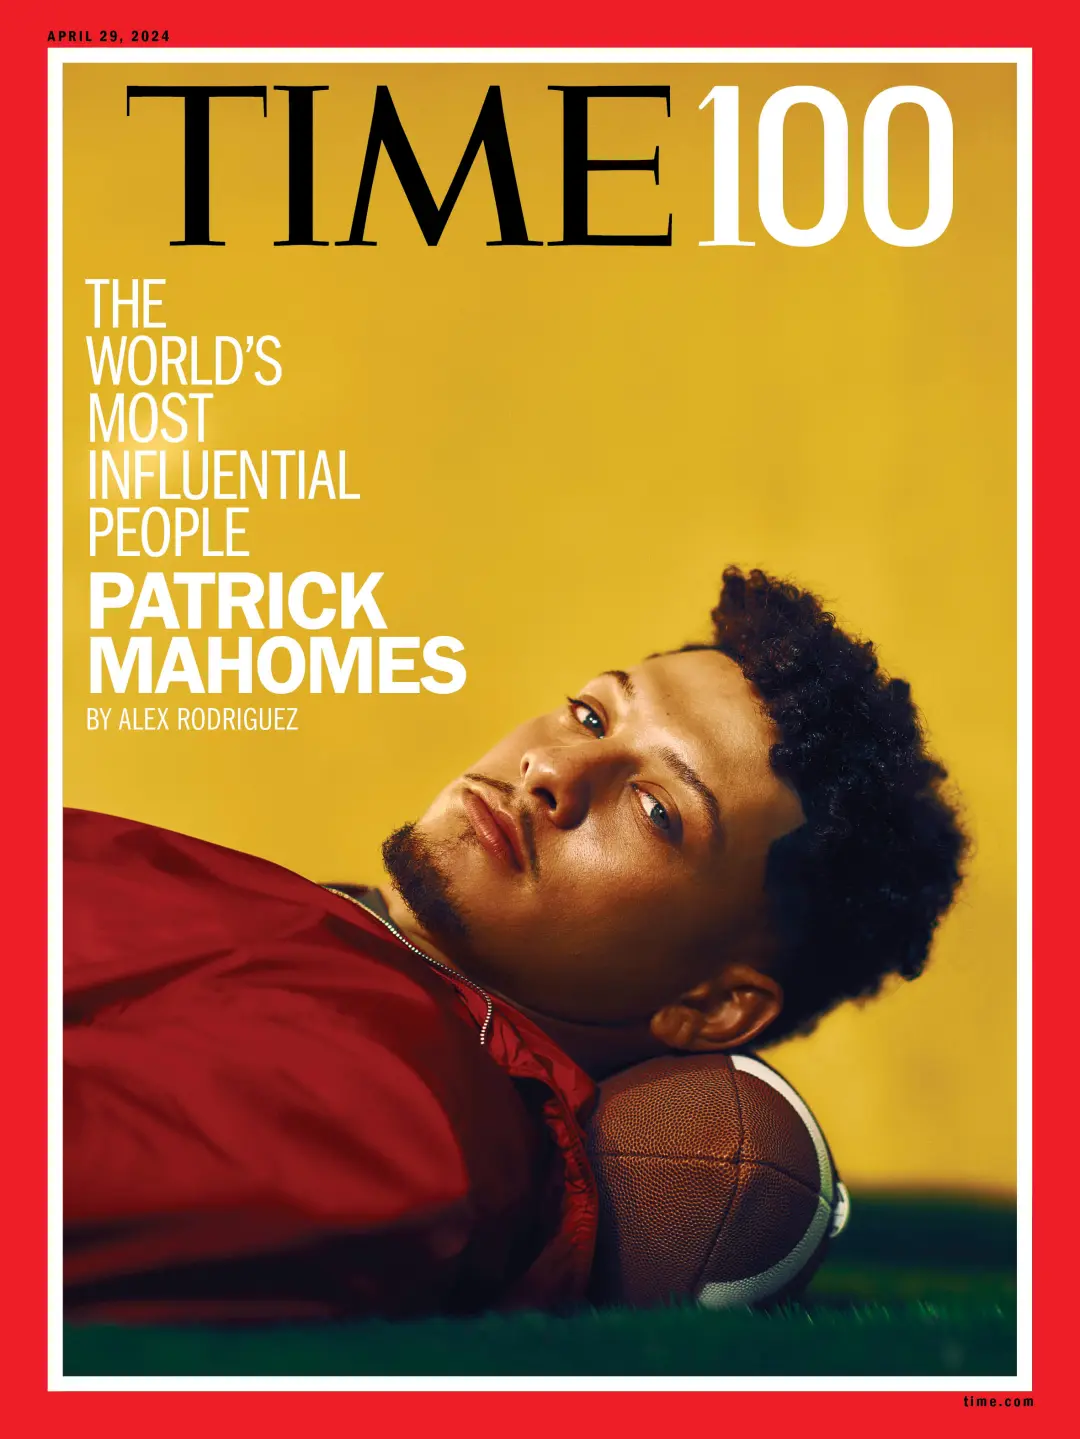 Patrick Mahomes, Kansas City Chiefs, Time Magazine, NFL Top 100